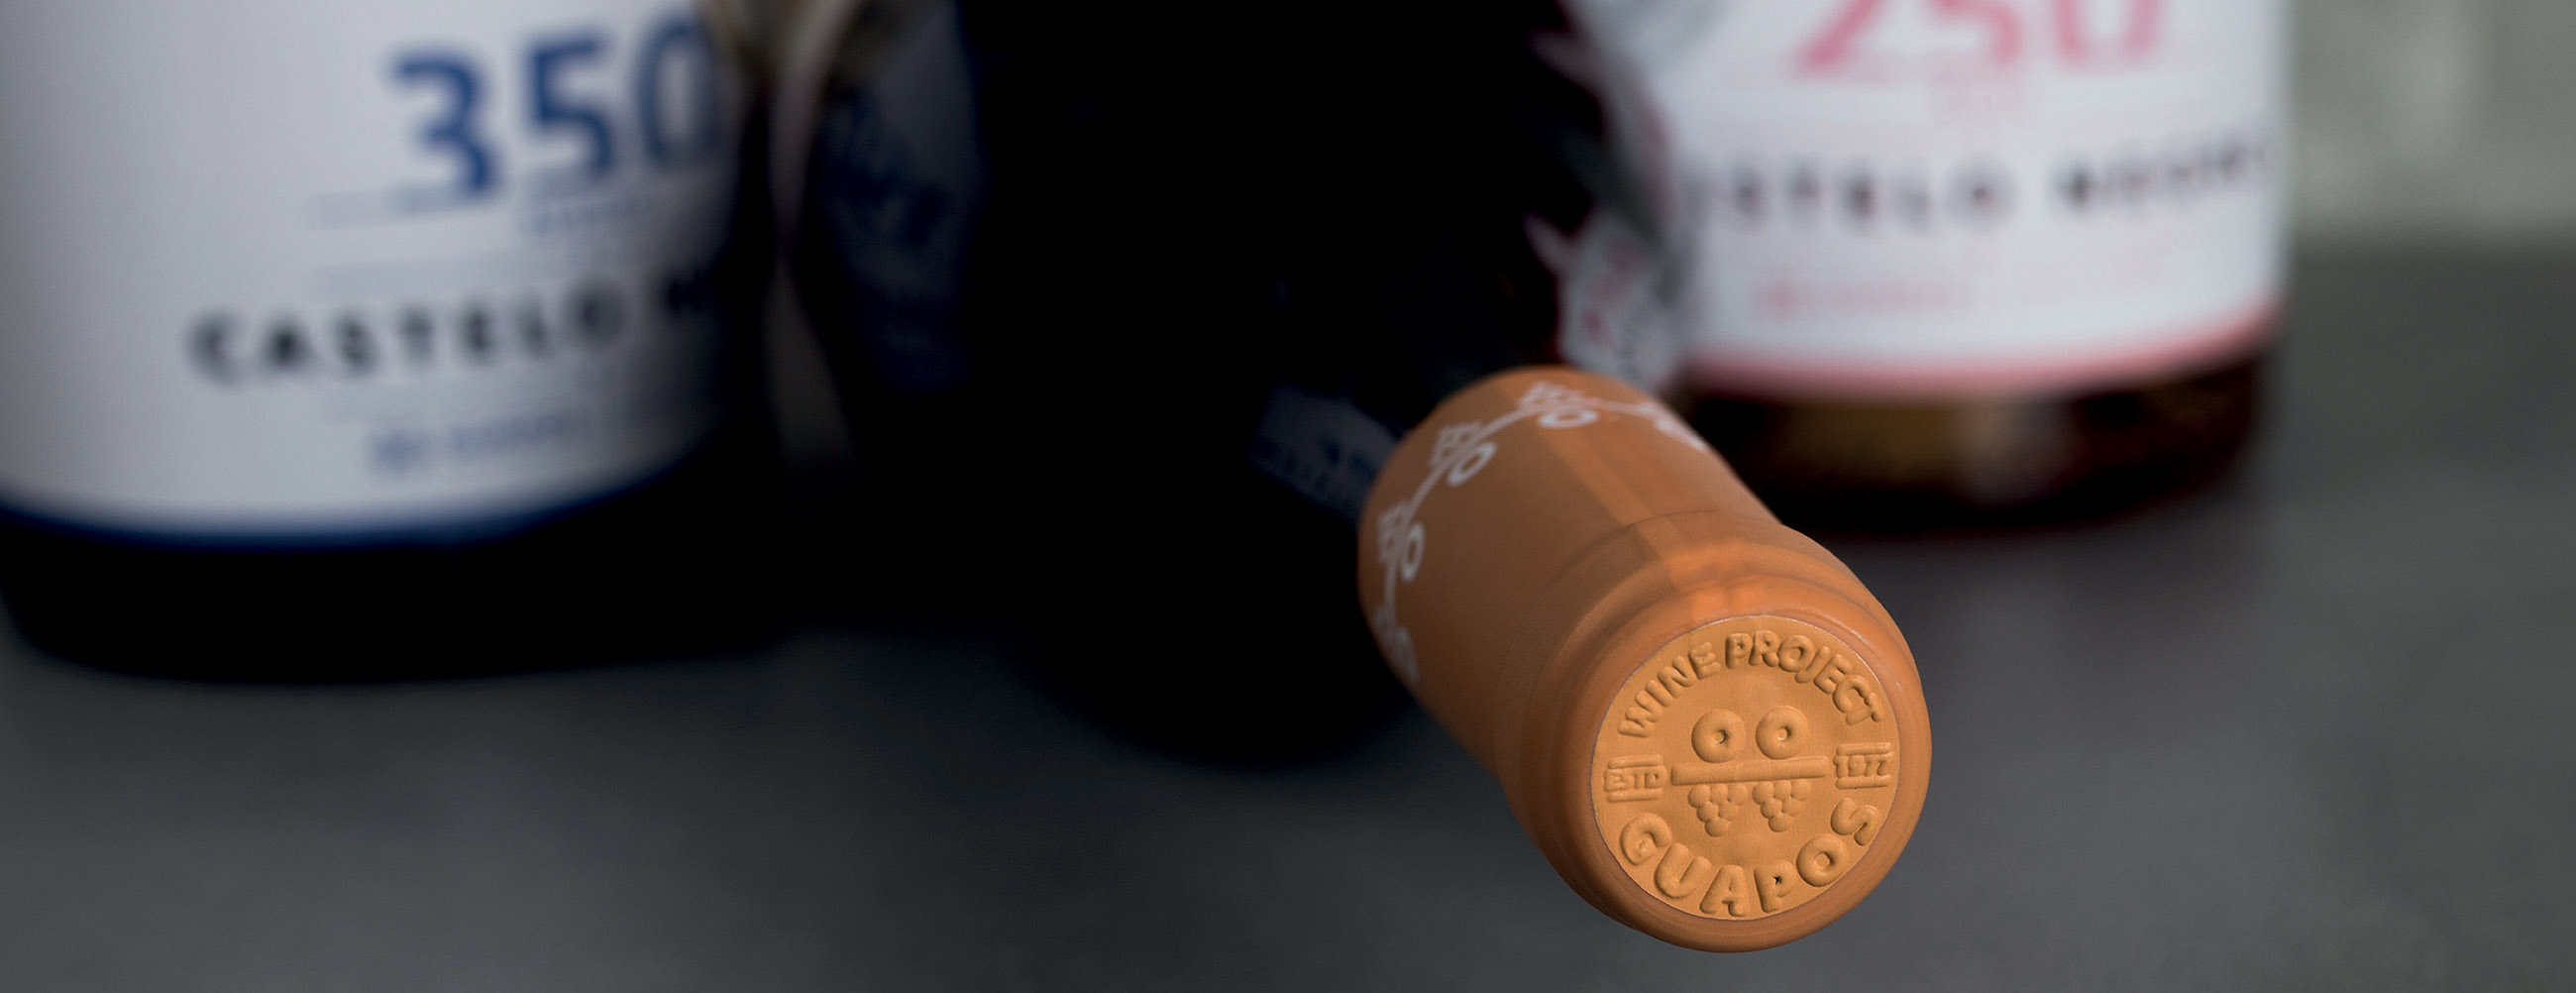 Guapos - Wine Label